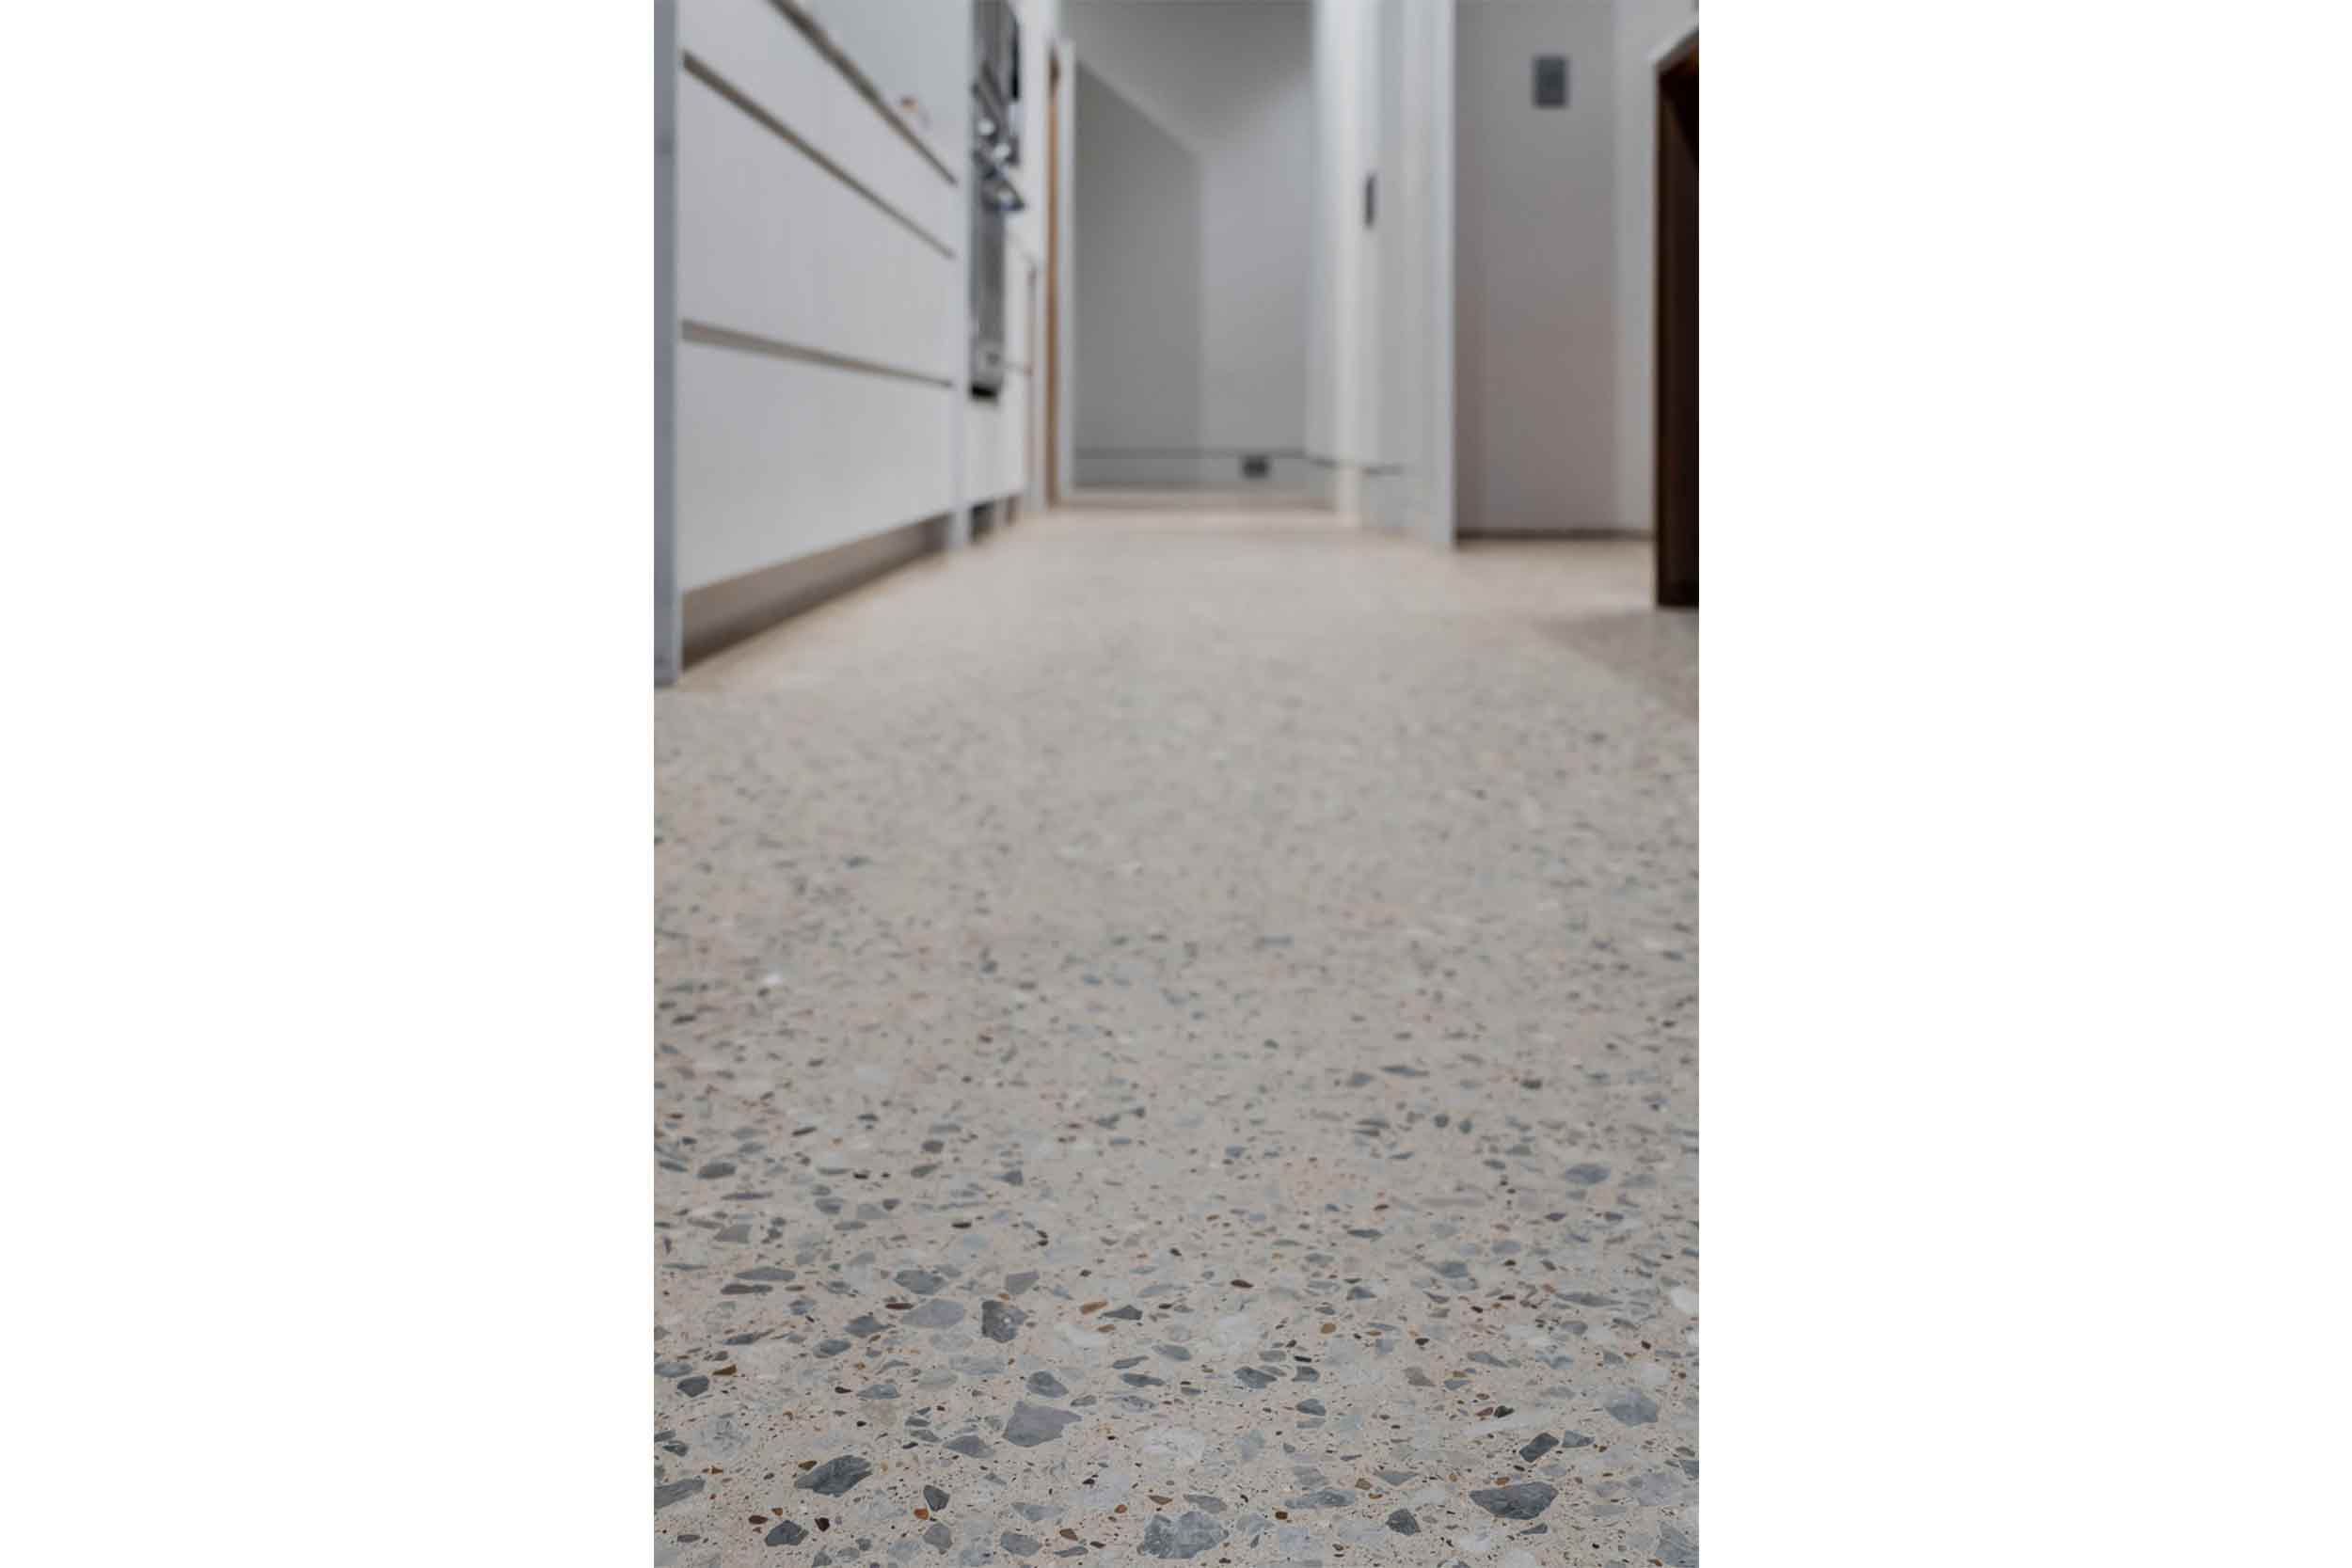 Large aggregate Polished Concrete Floor